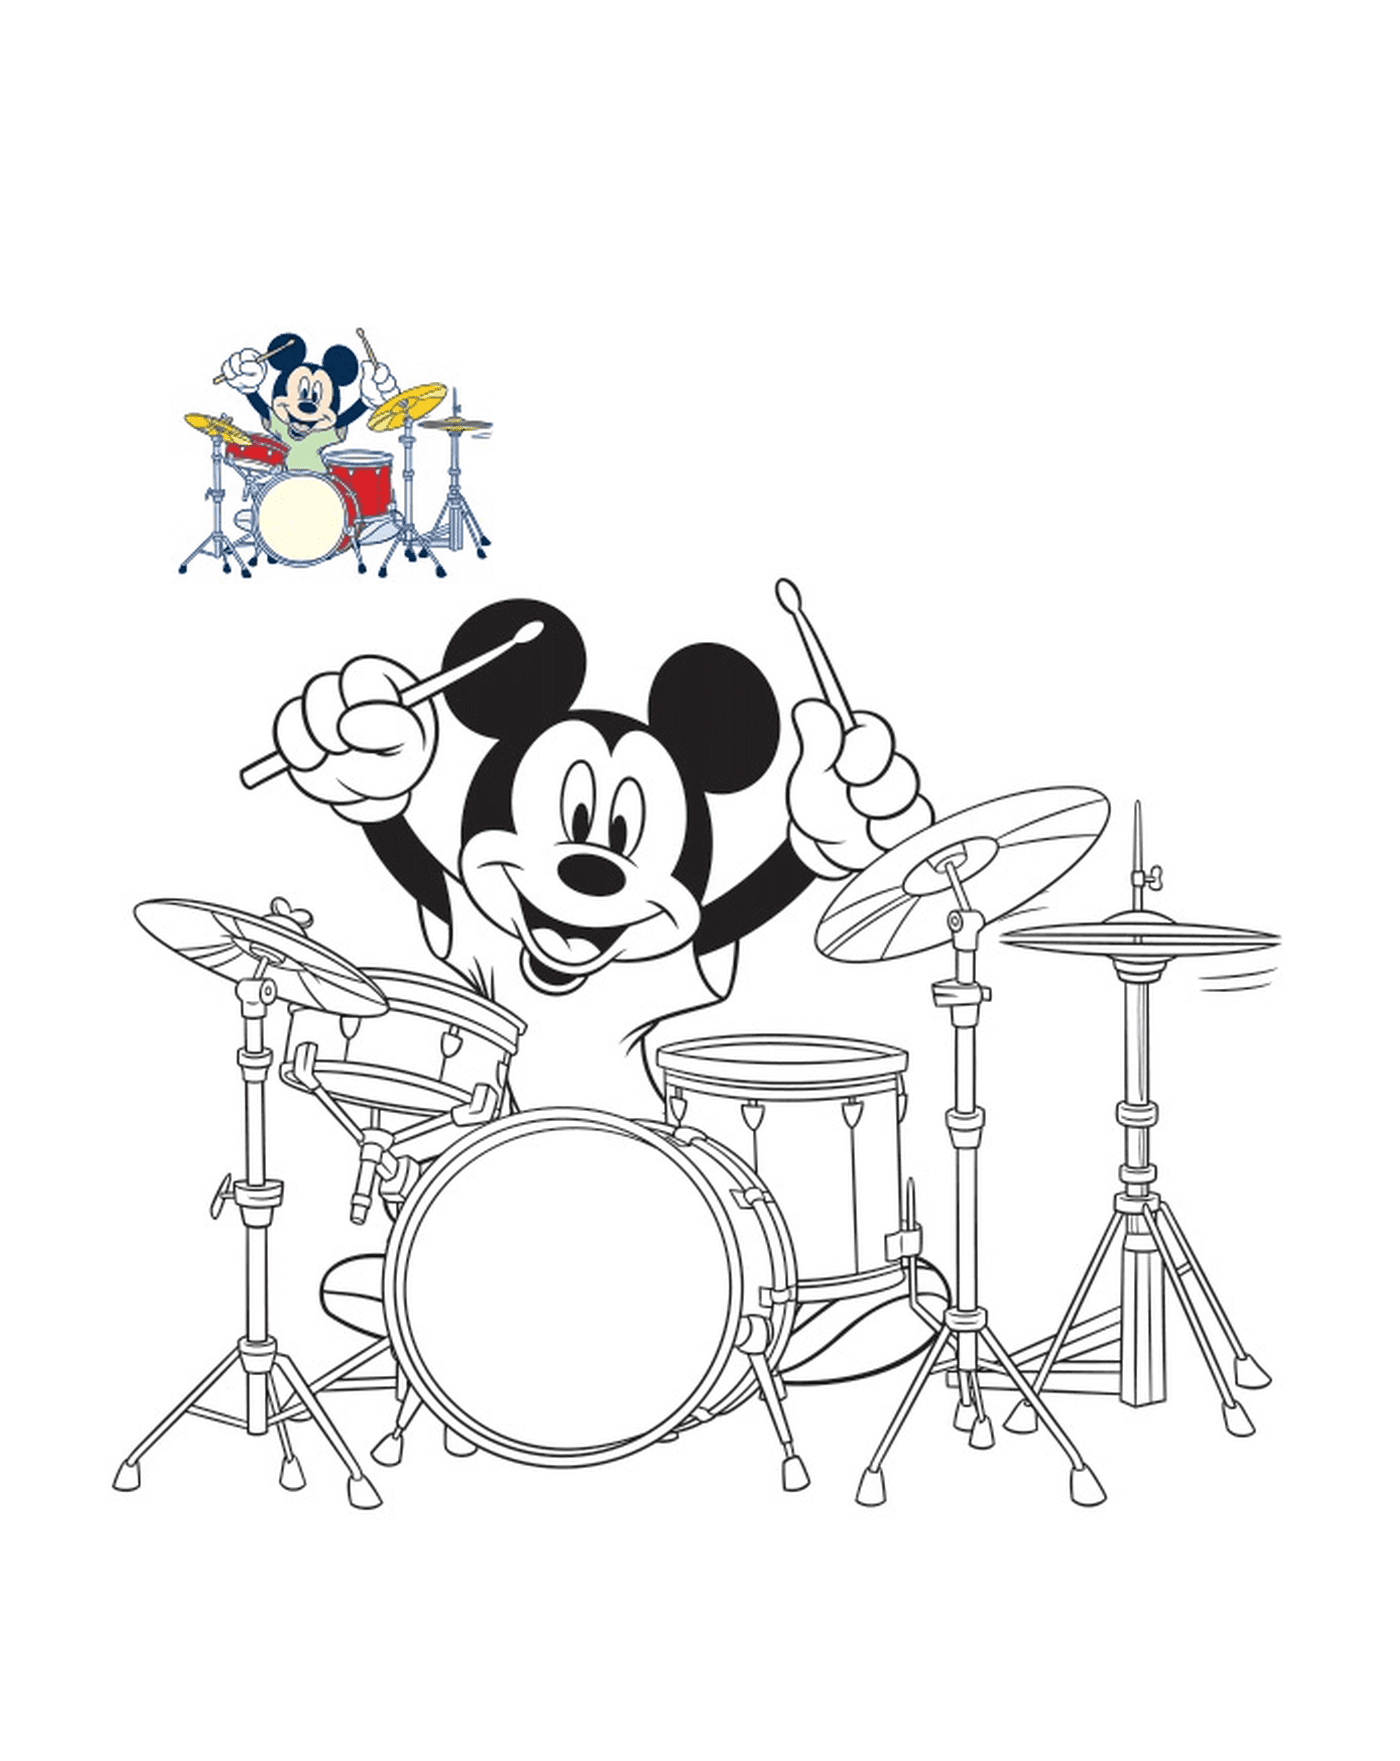  Mickey Mouse spielt Schlagzeug 